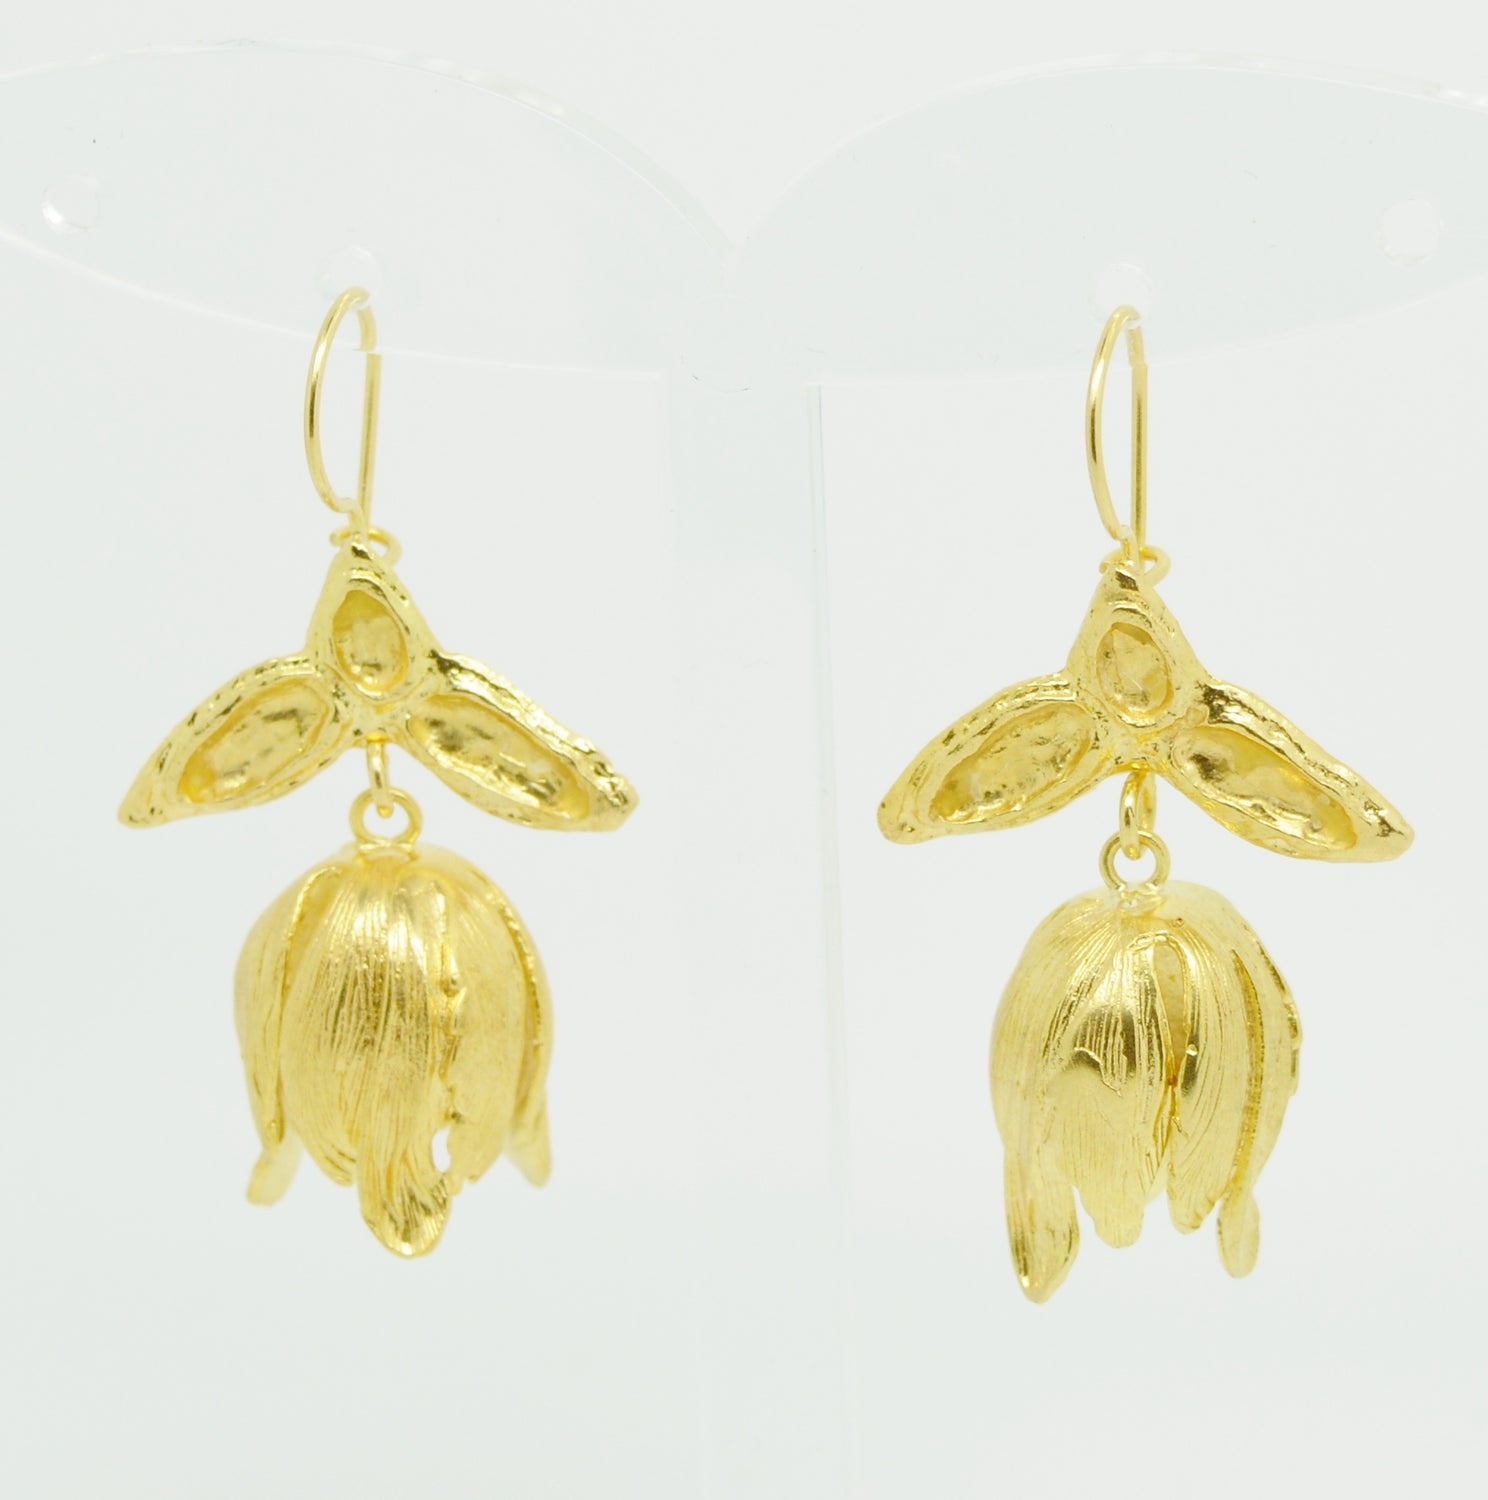 Aylas Drop Tulip earrings - Gold plated - Handmade in Ottoman style